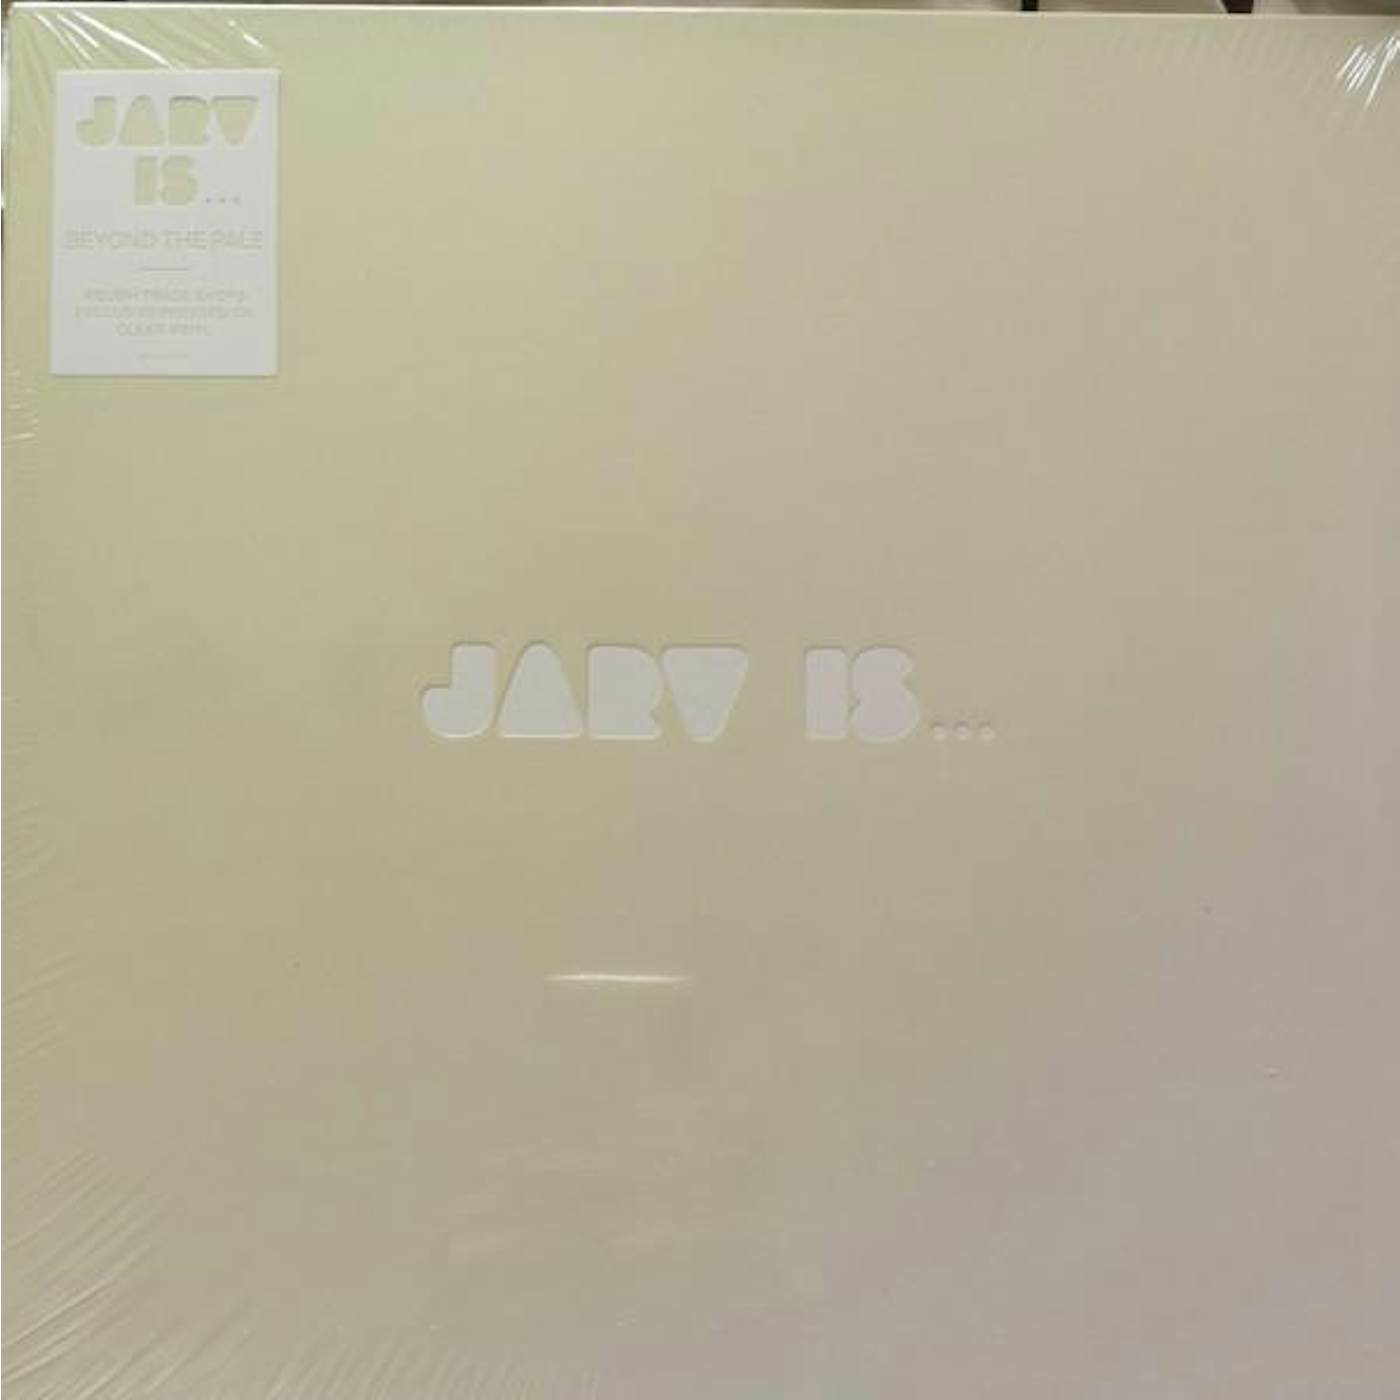 JARV IS... BEYOND THE PALE - CLEAR VINYL Vinyl Record